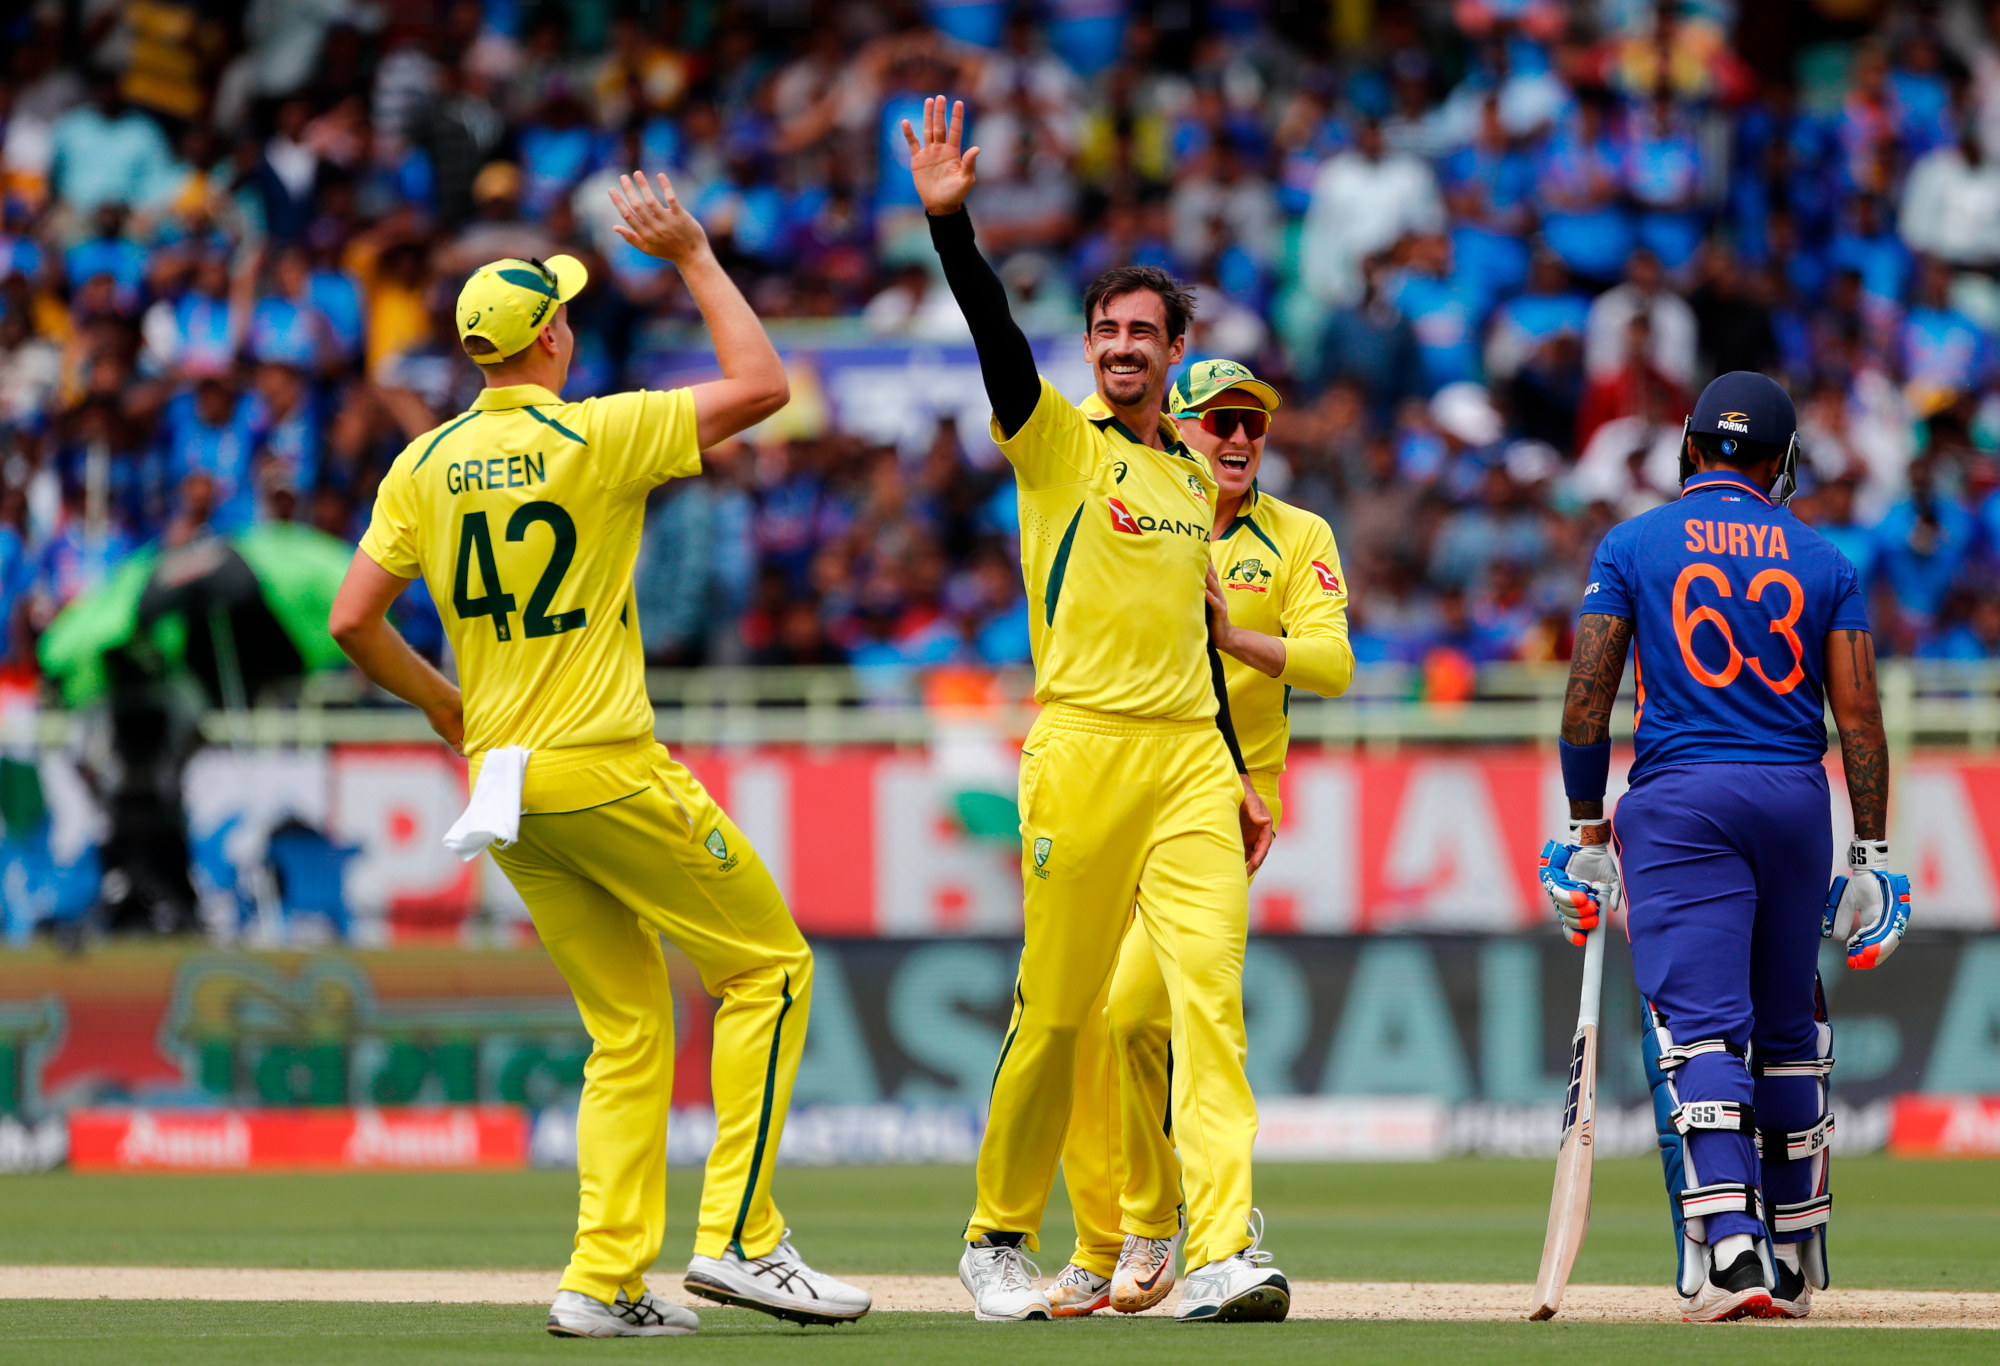 Mitchell Starc of Australia celebrates the wicket of Suryakumar Yadav of India.